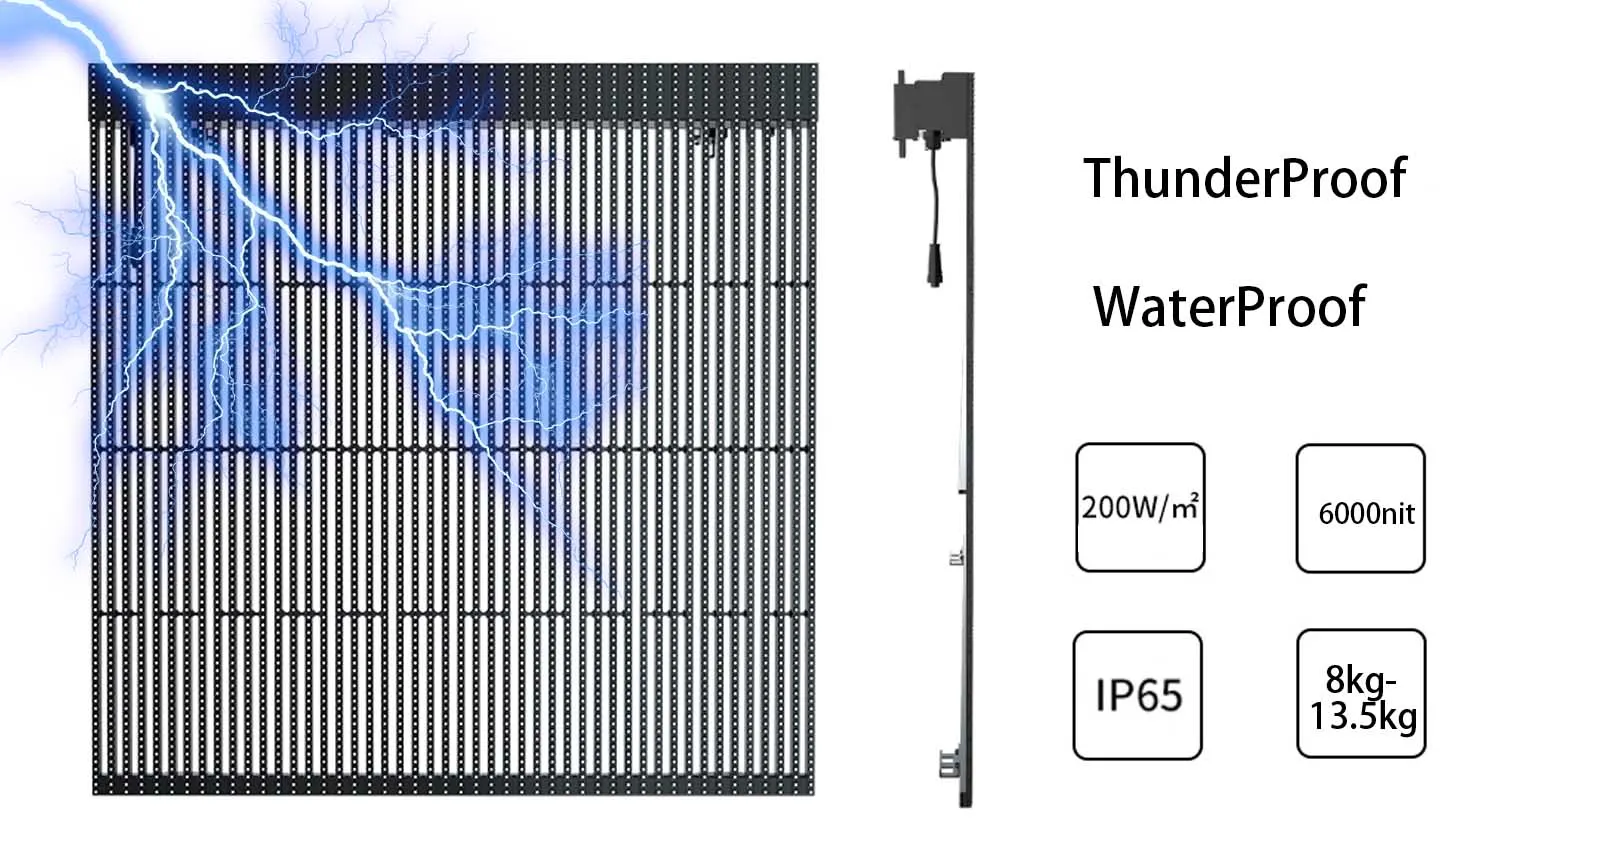 Krado-Transparent led screen-product-Thunderproof-2